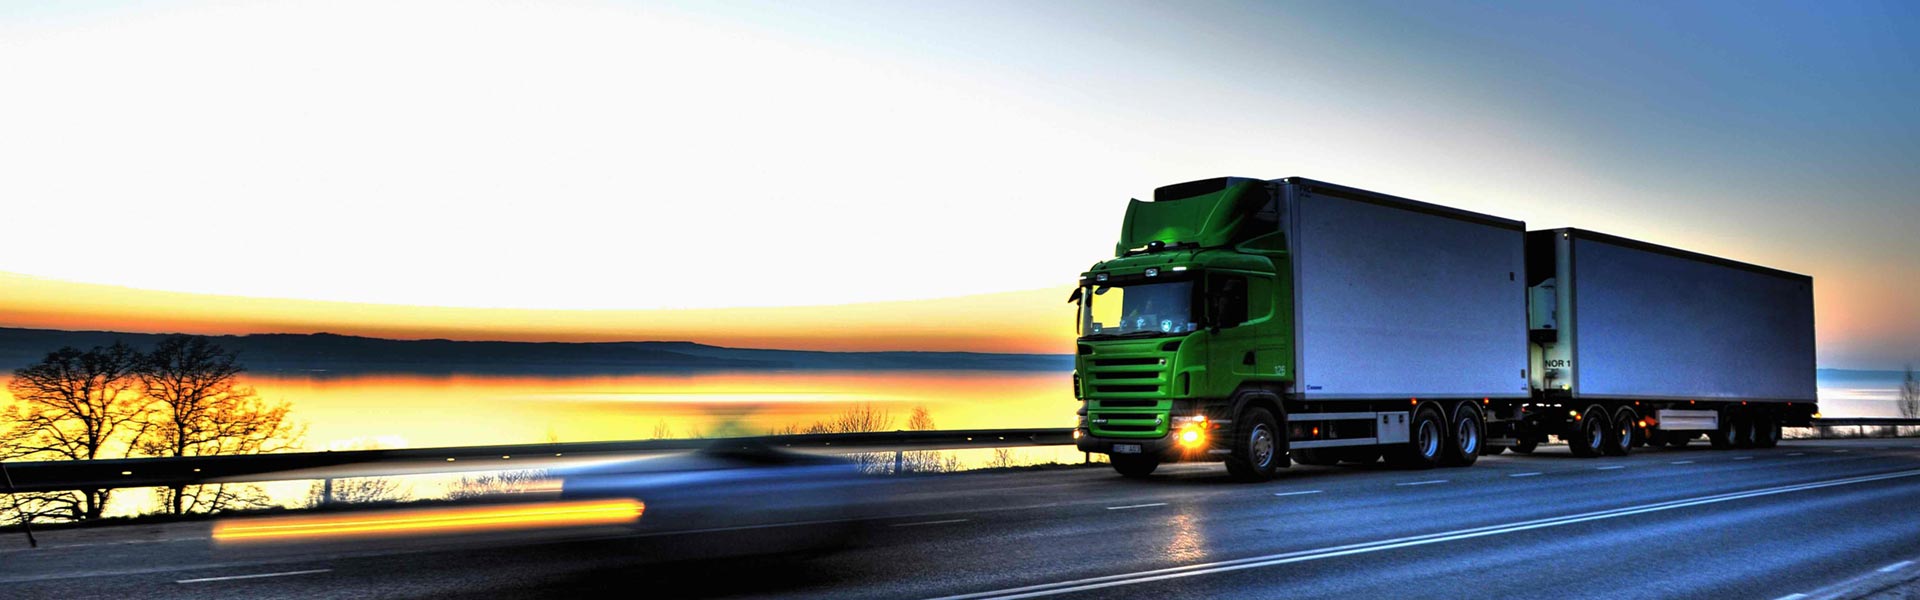 New Releases of SAP Transportation Management and SAP Extended Warehouse Management Deliver Enhanced Digital Logistics